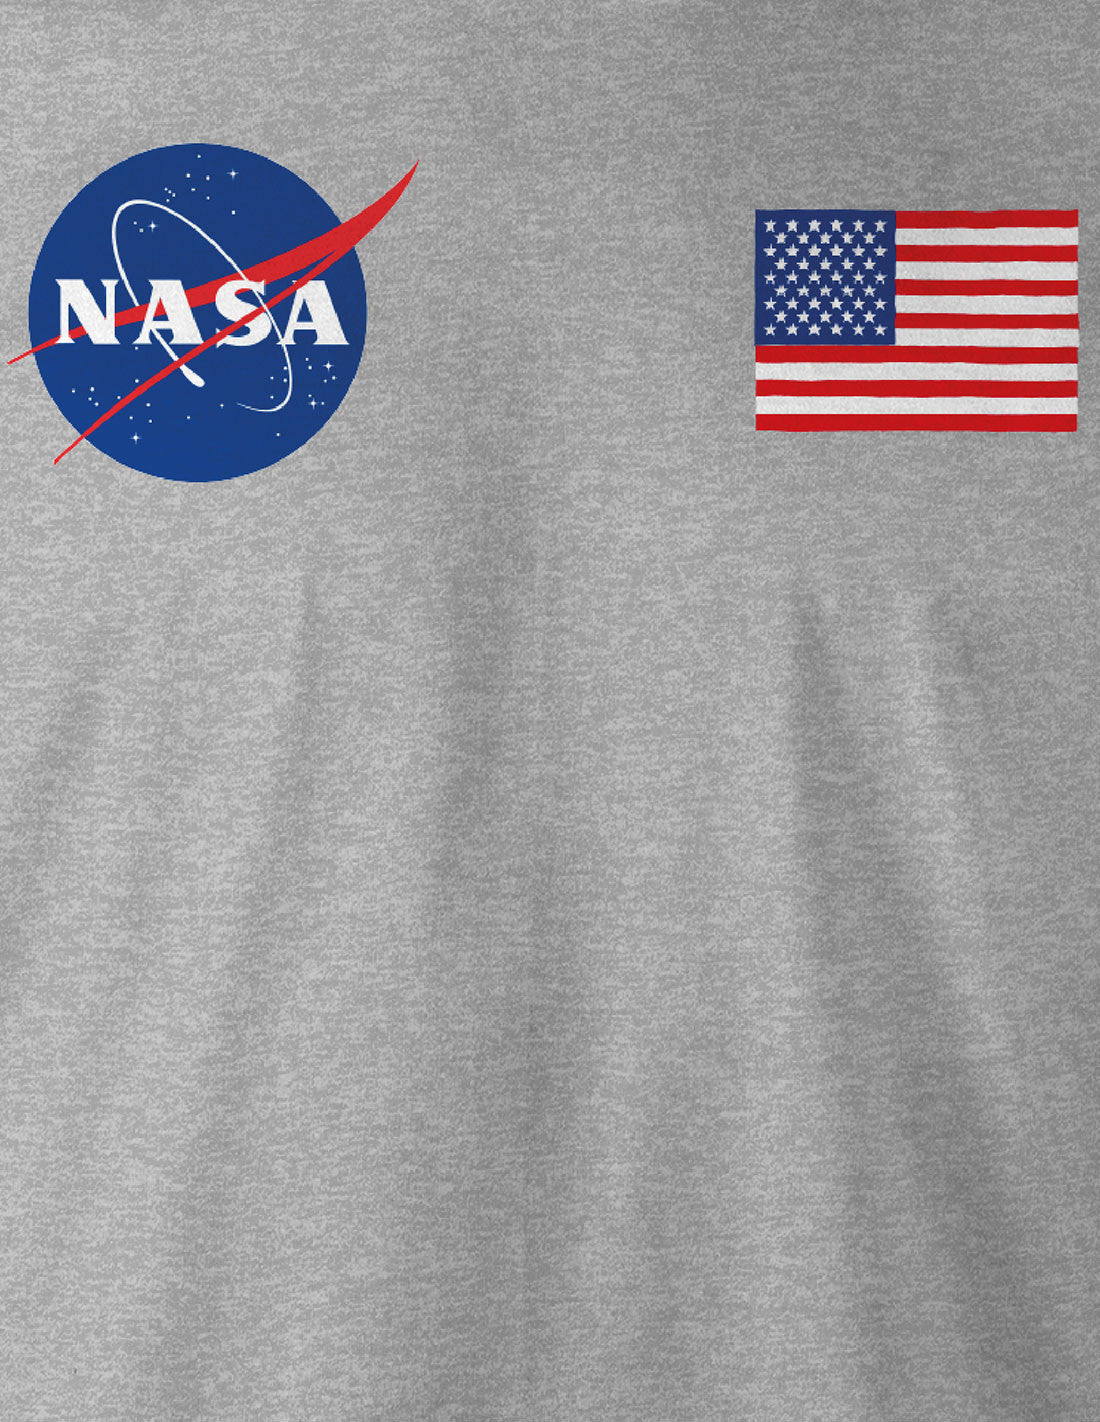 T-shirt NASA - Rocket Scientist CREW